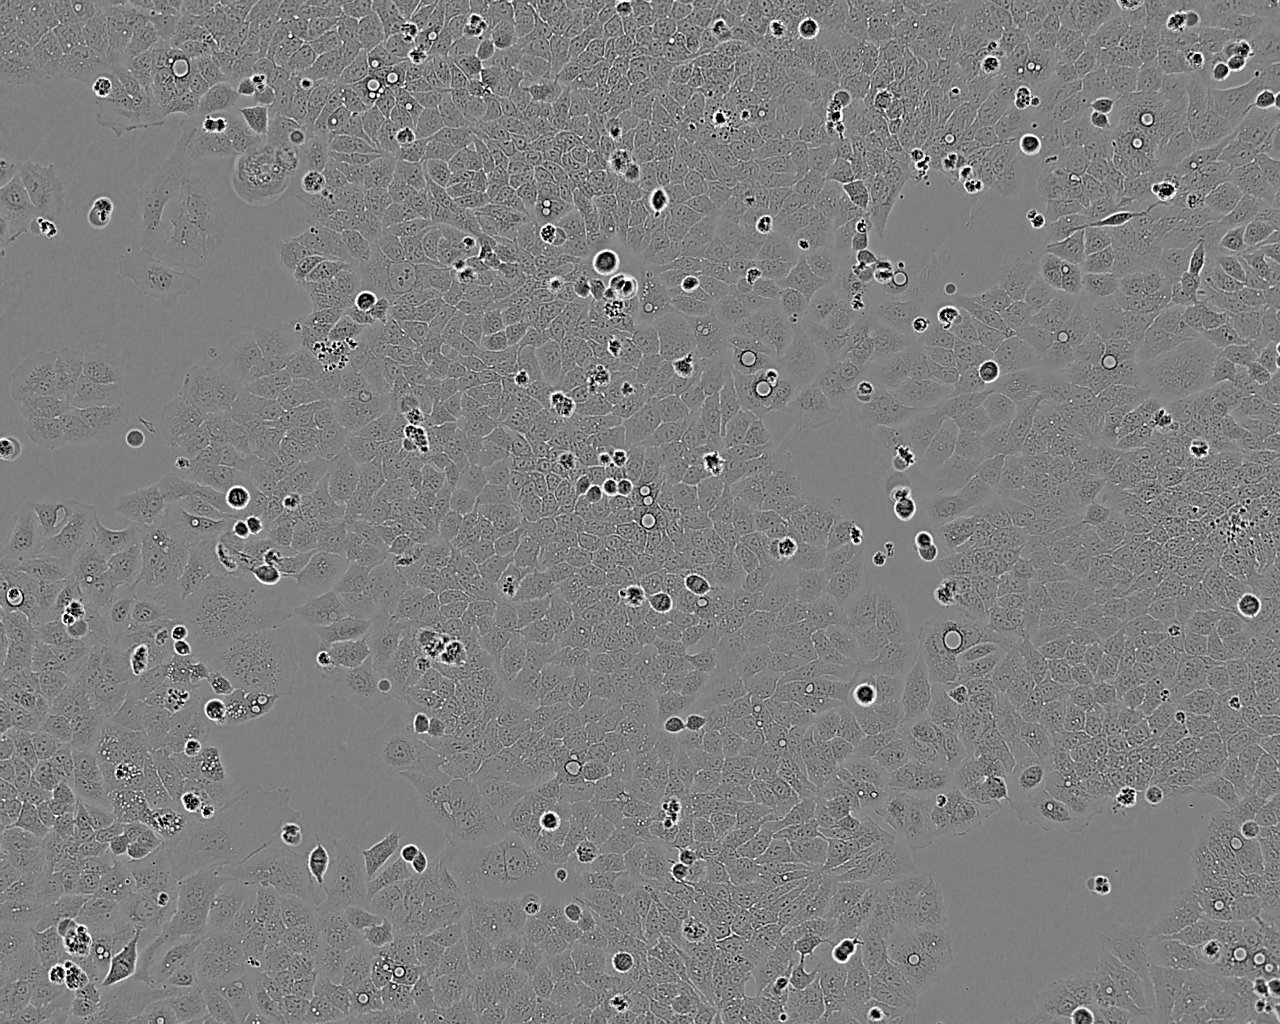 V79 epithelioid cells仓鼠肺细胞系,V79 epithelioid cells